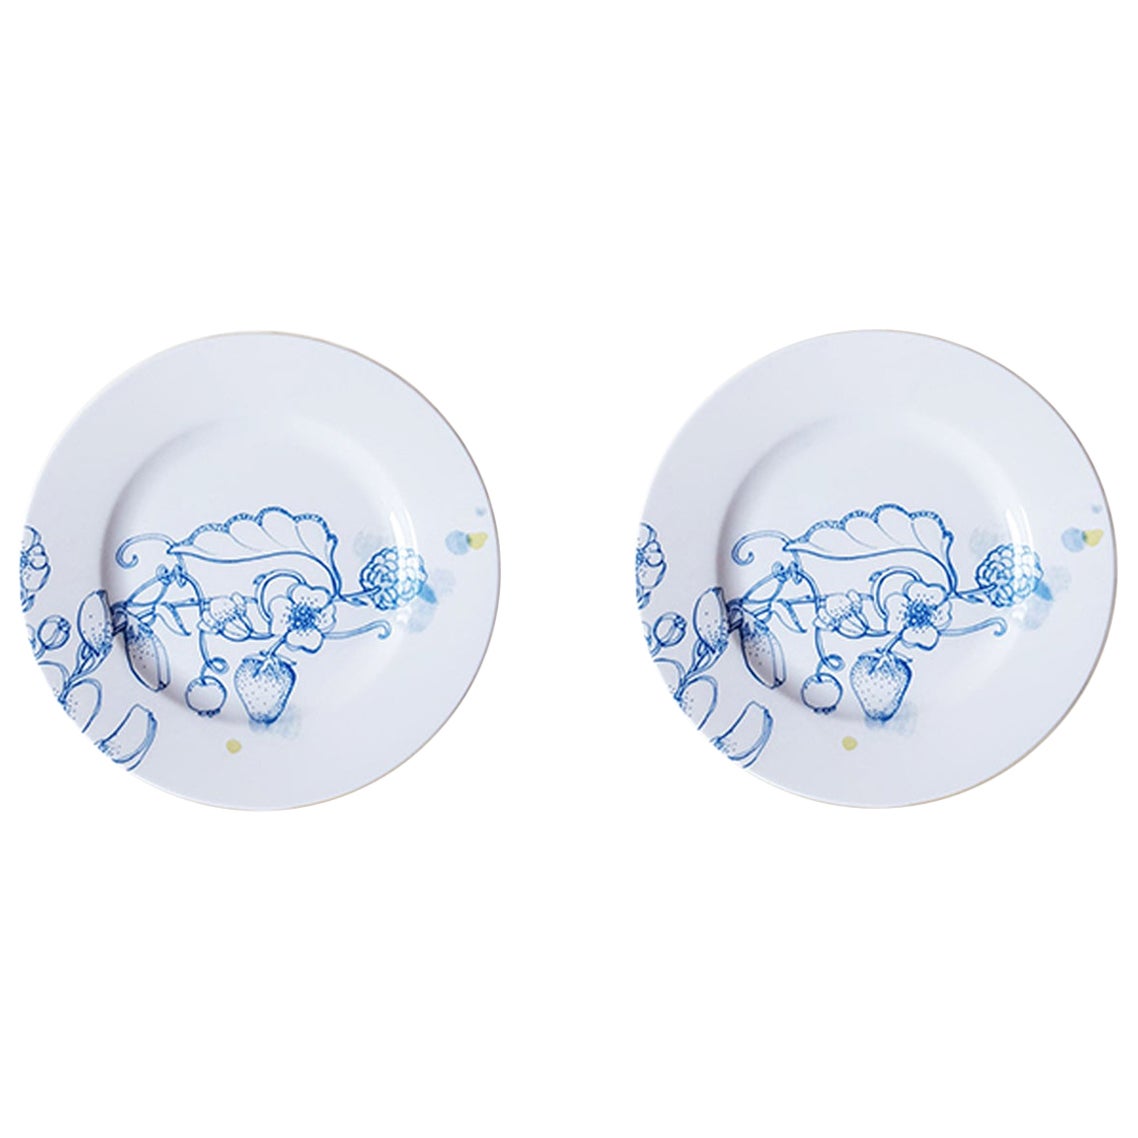 Blue Summer, Contemporary Porcelain Bread Plates Set with Blue Floral Design